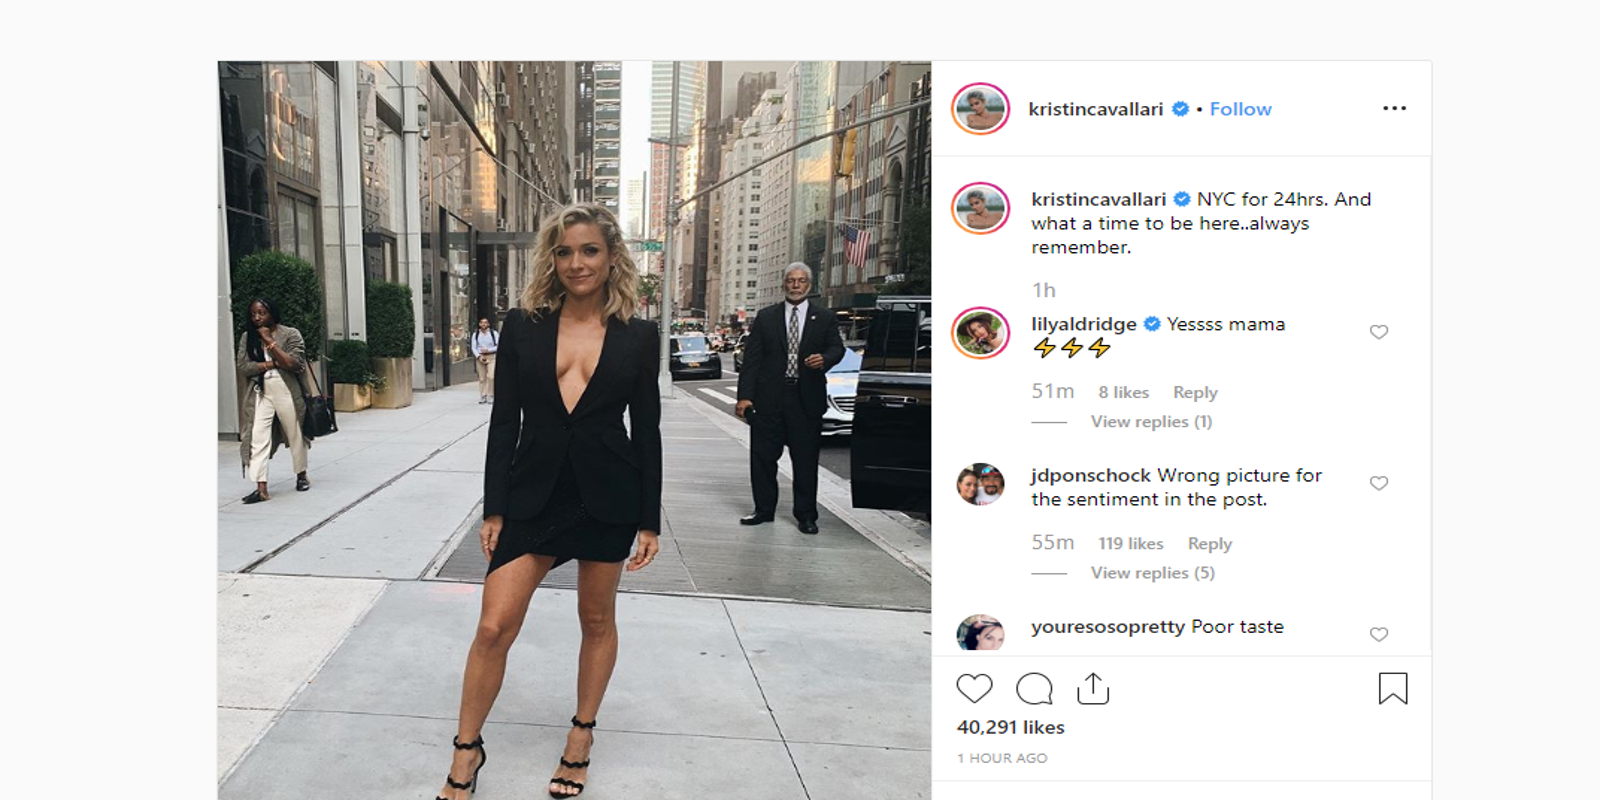 Kristin Cavallari fired employee after 'insensitive' Instagram post, report